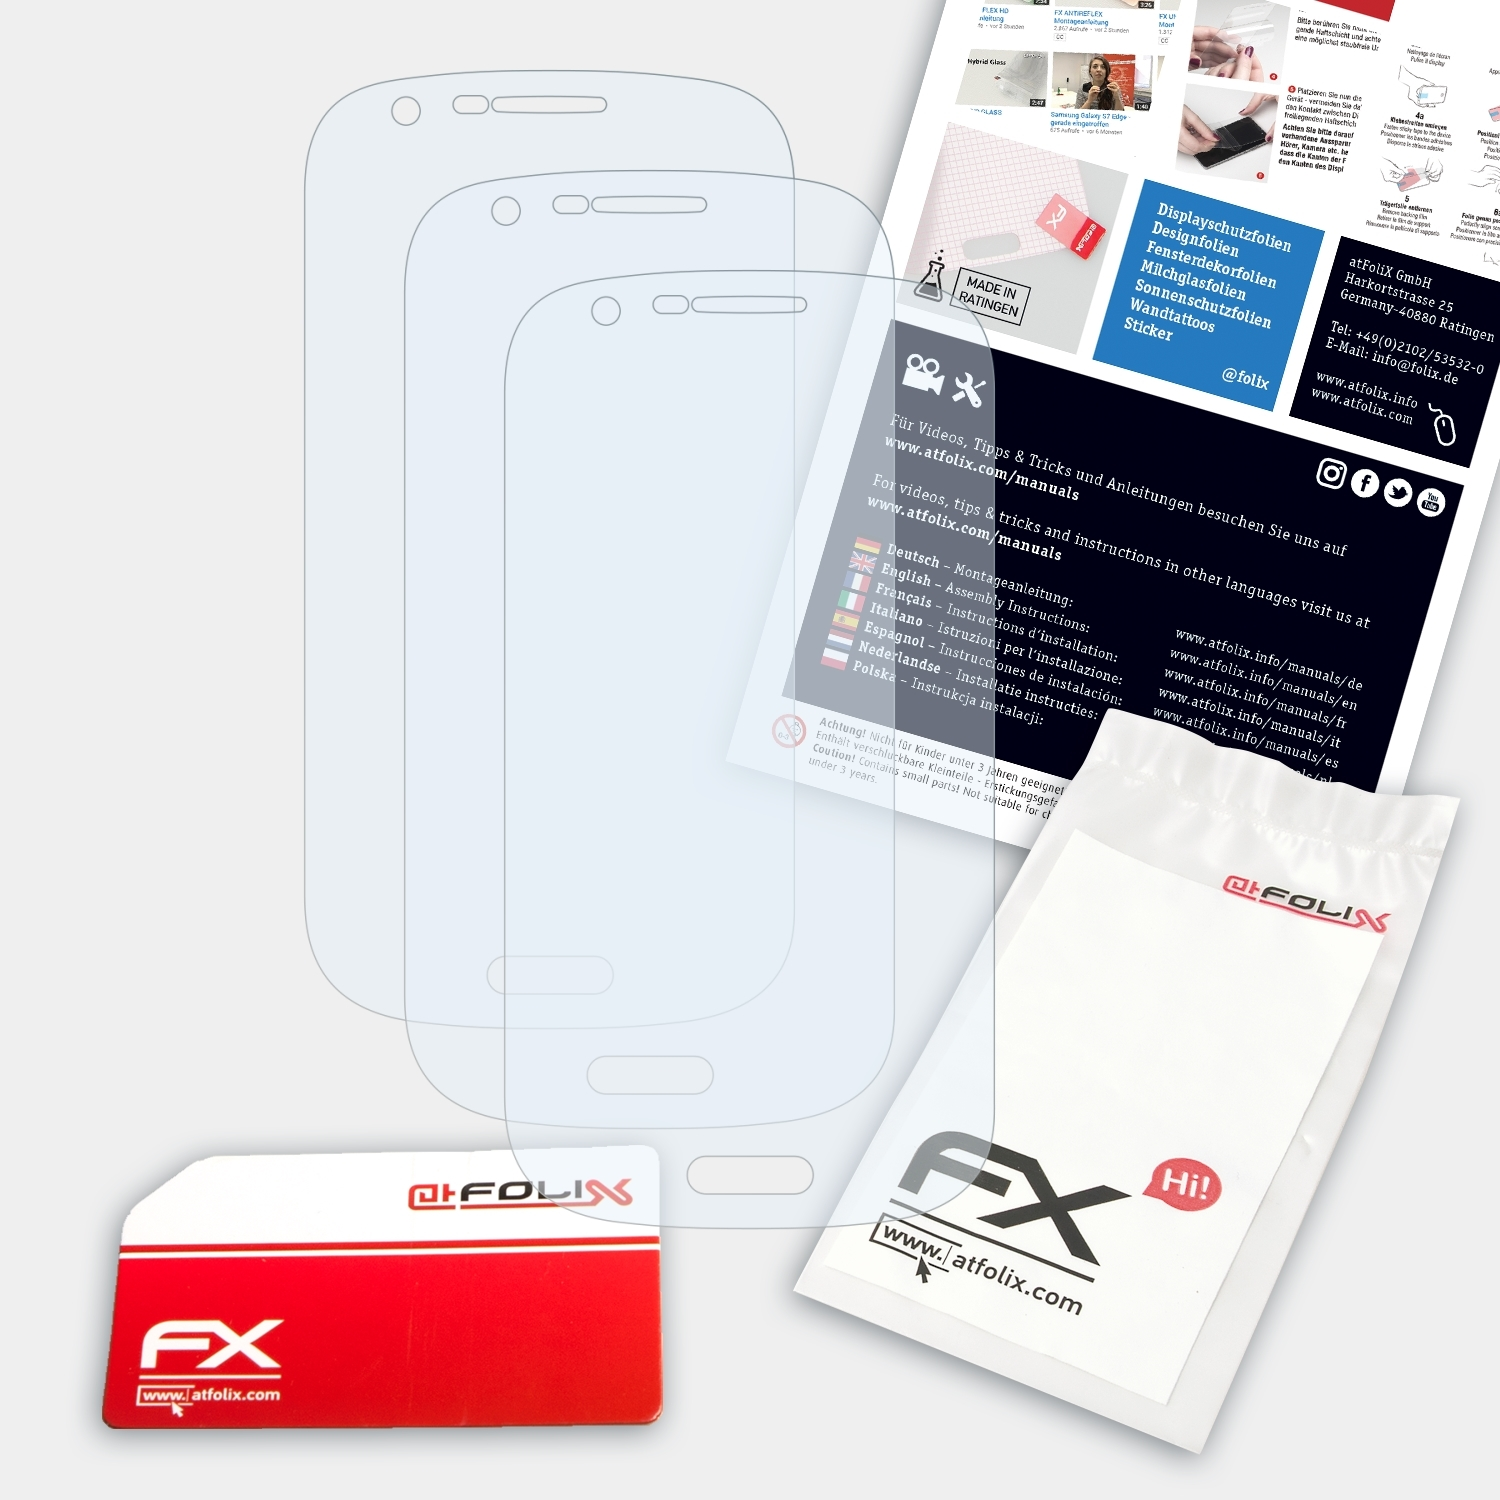 ATFOLIX 3x FX-Clear Galaxy Express (GT-i8730)) Samsung Displayschutz(für